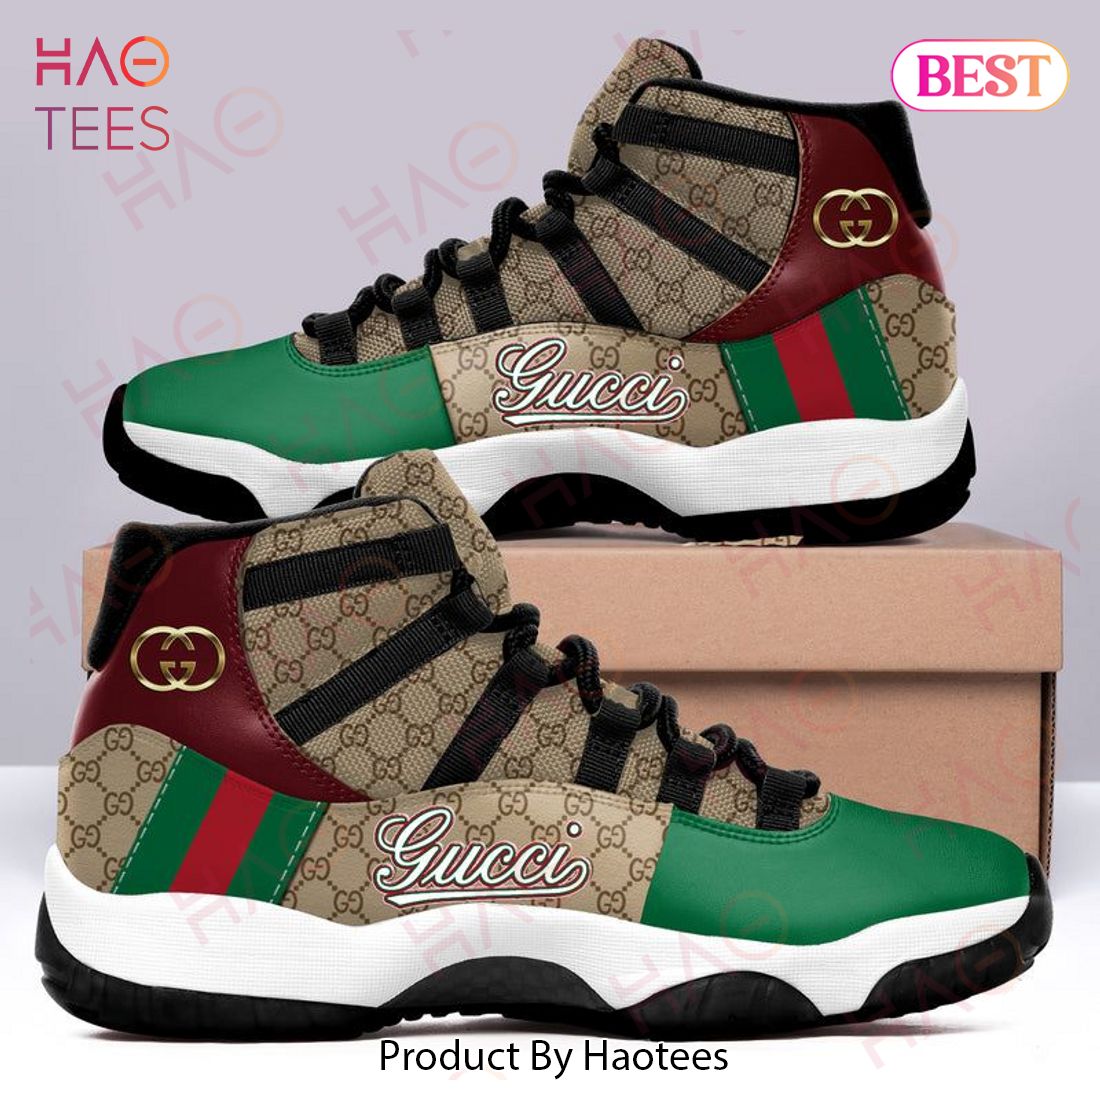 Gucci Stripe Air Jordan 11 Sneakers Shoes Hot 2022 Gifts For Men Women